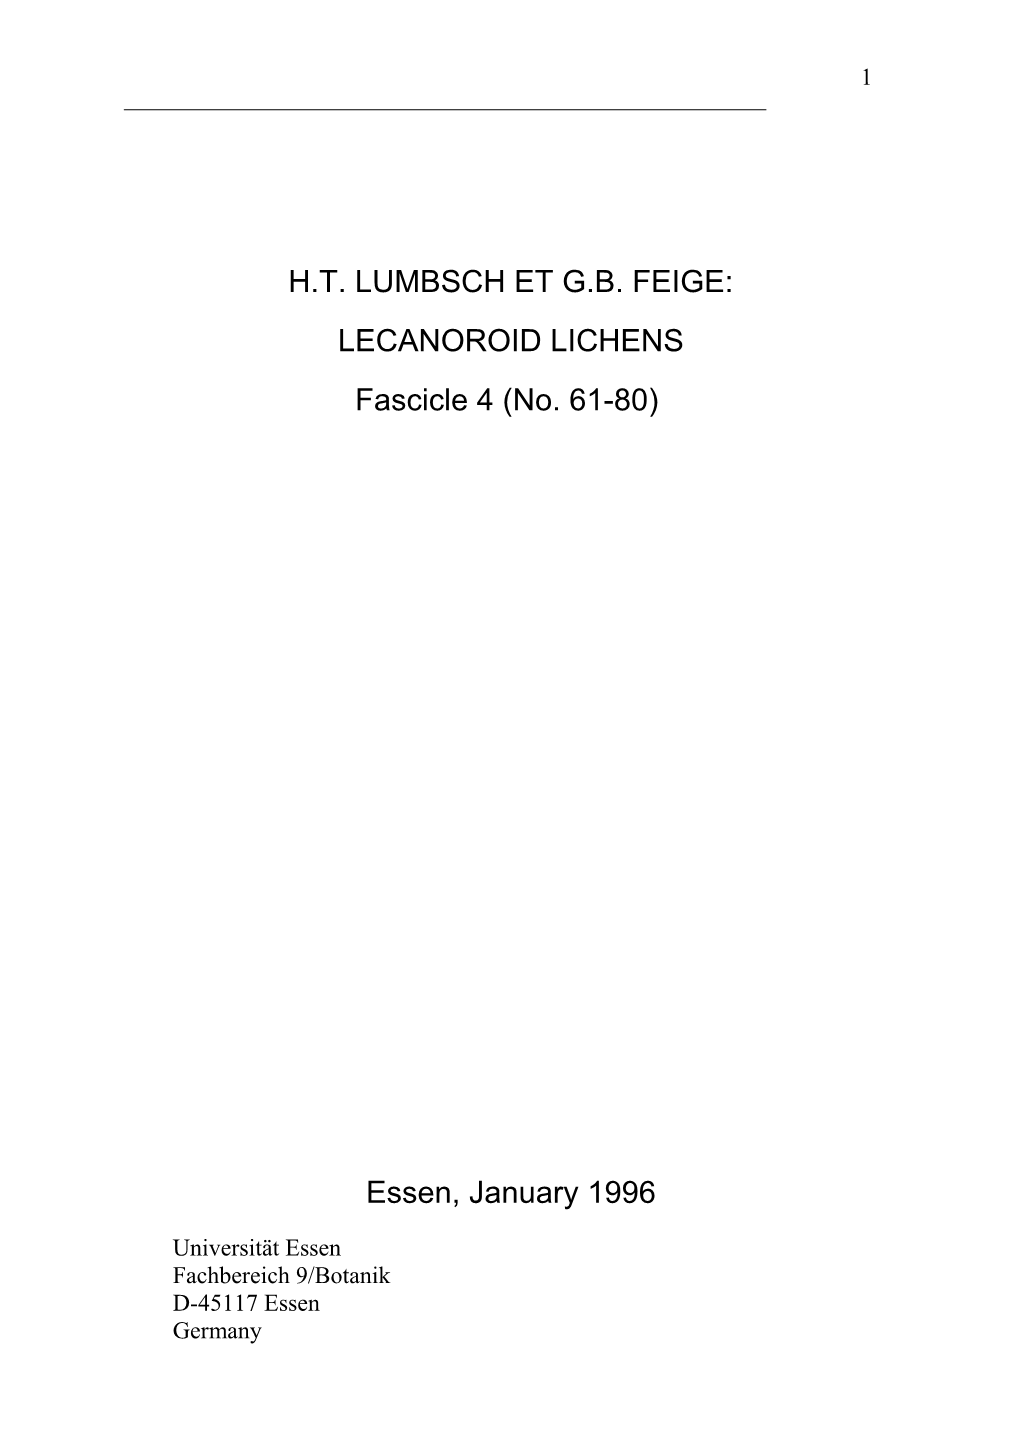 H.T. Lumbsch Et G.B. Feige: Lecanoroid Lichens